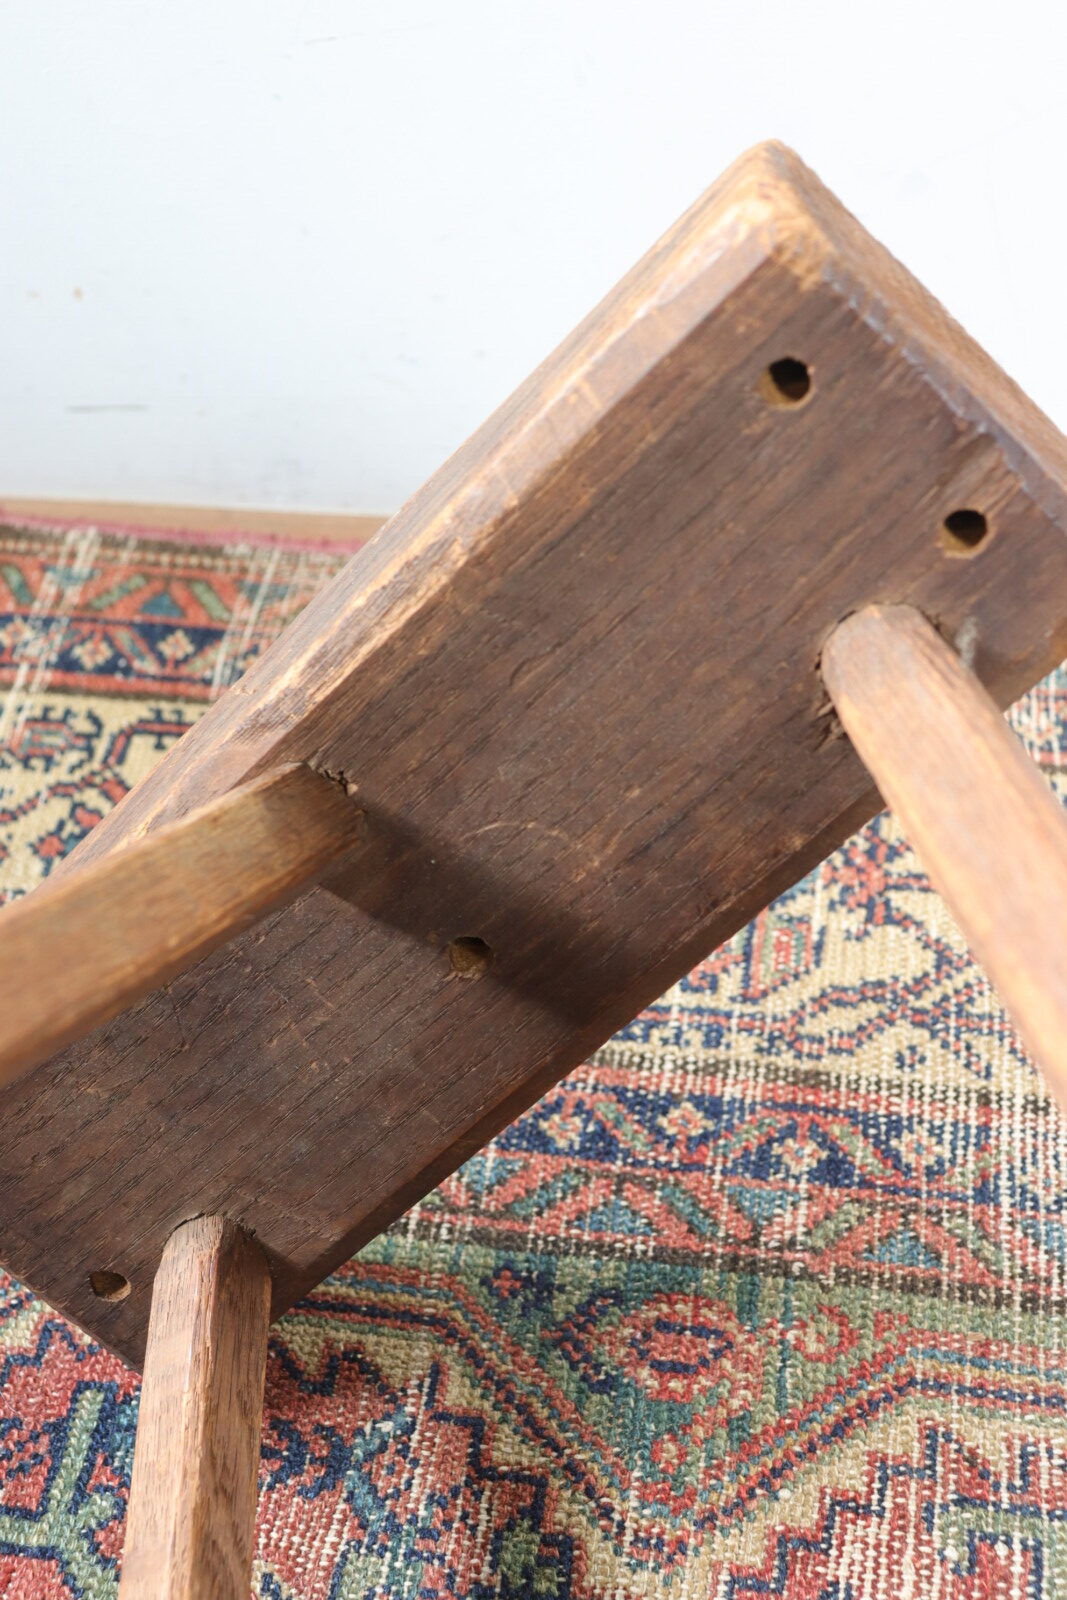 sawhorse,vintage,3legs stool,USA